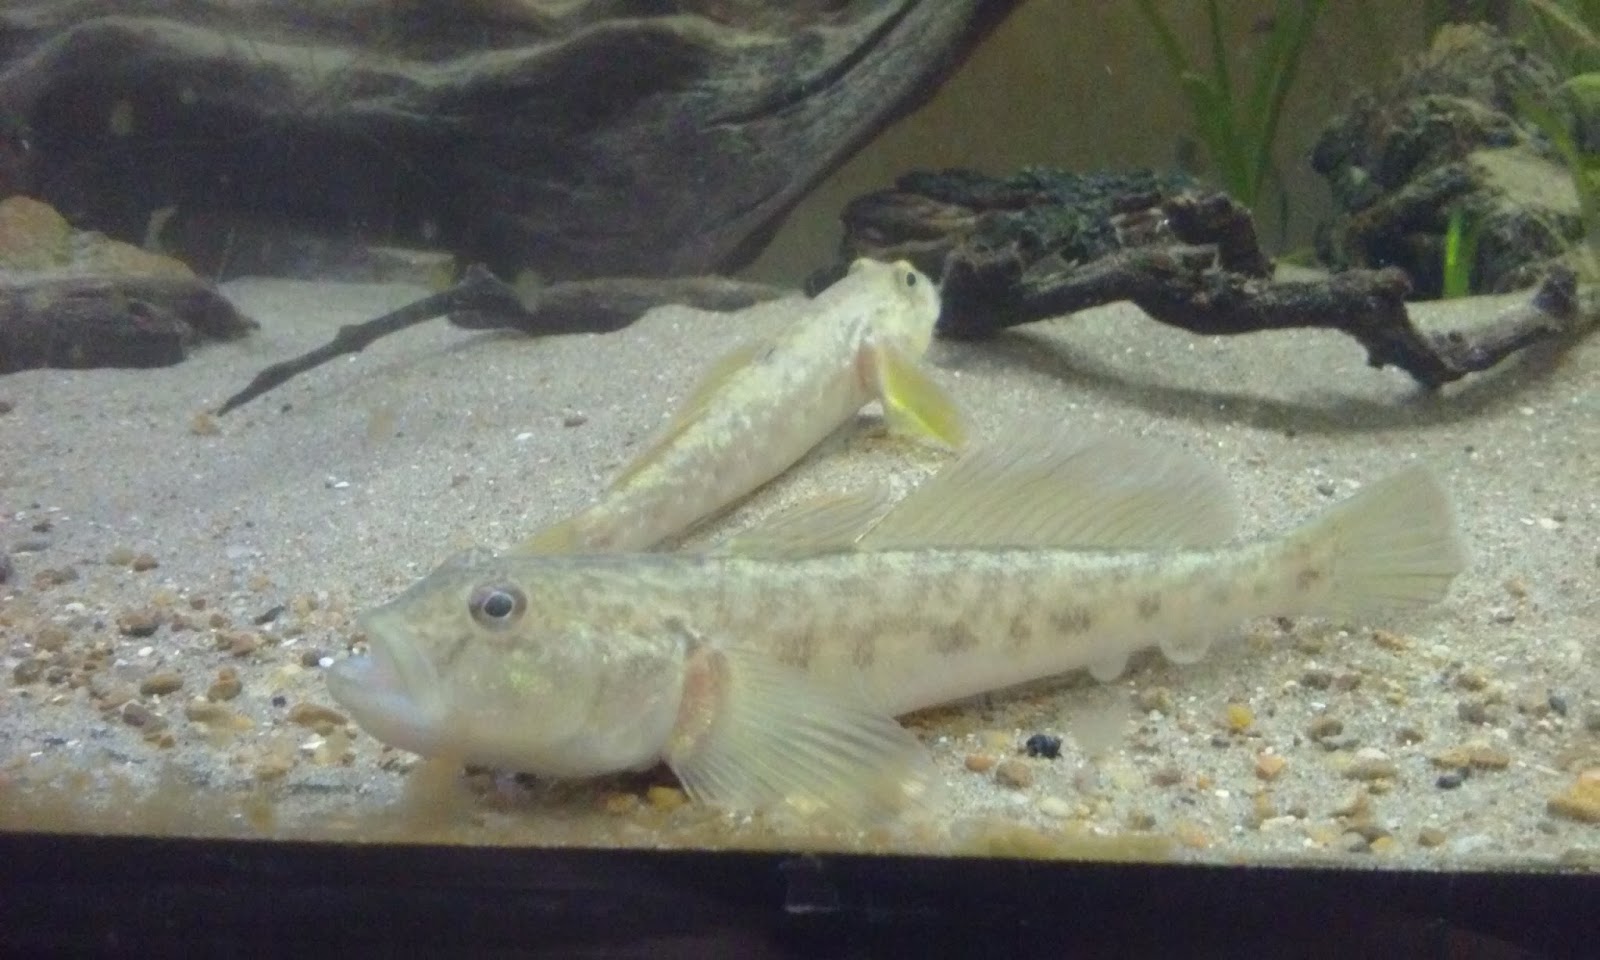 Cool Goby Blog: My Freshwater Gobies in their Biotope Aquarium